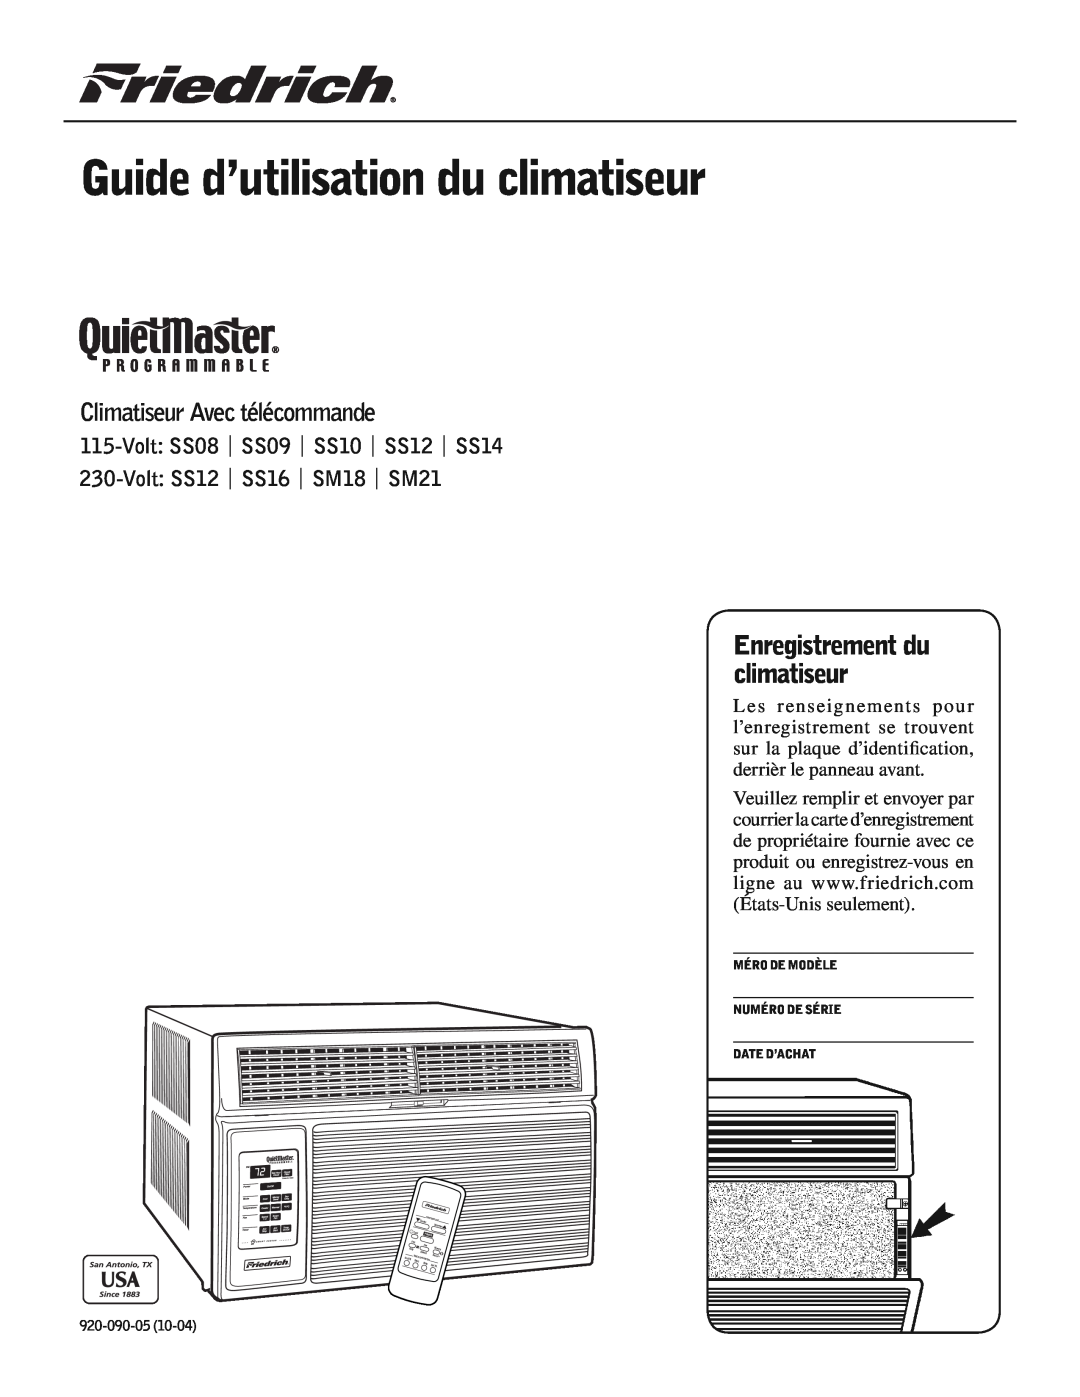 Friedrich SS09 Guide d’utilisation du climatiseur, Enregistrement du climatiseur, Climatiseur Avec télécommande, Cool 